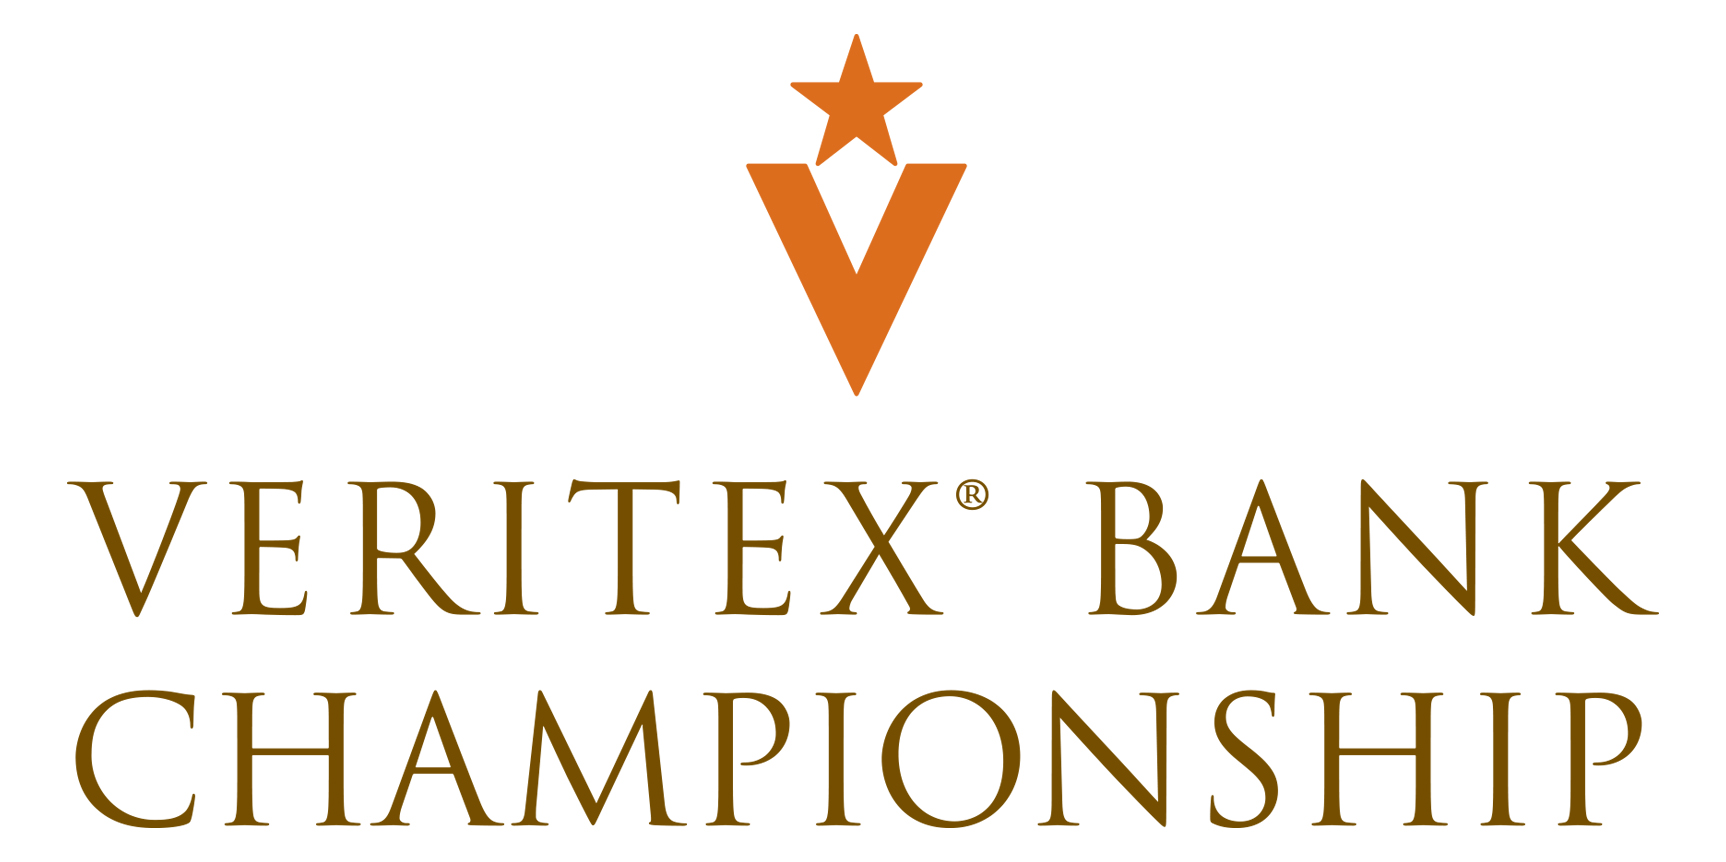 Veritex Bank Championship